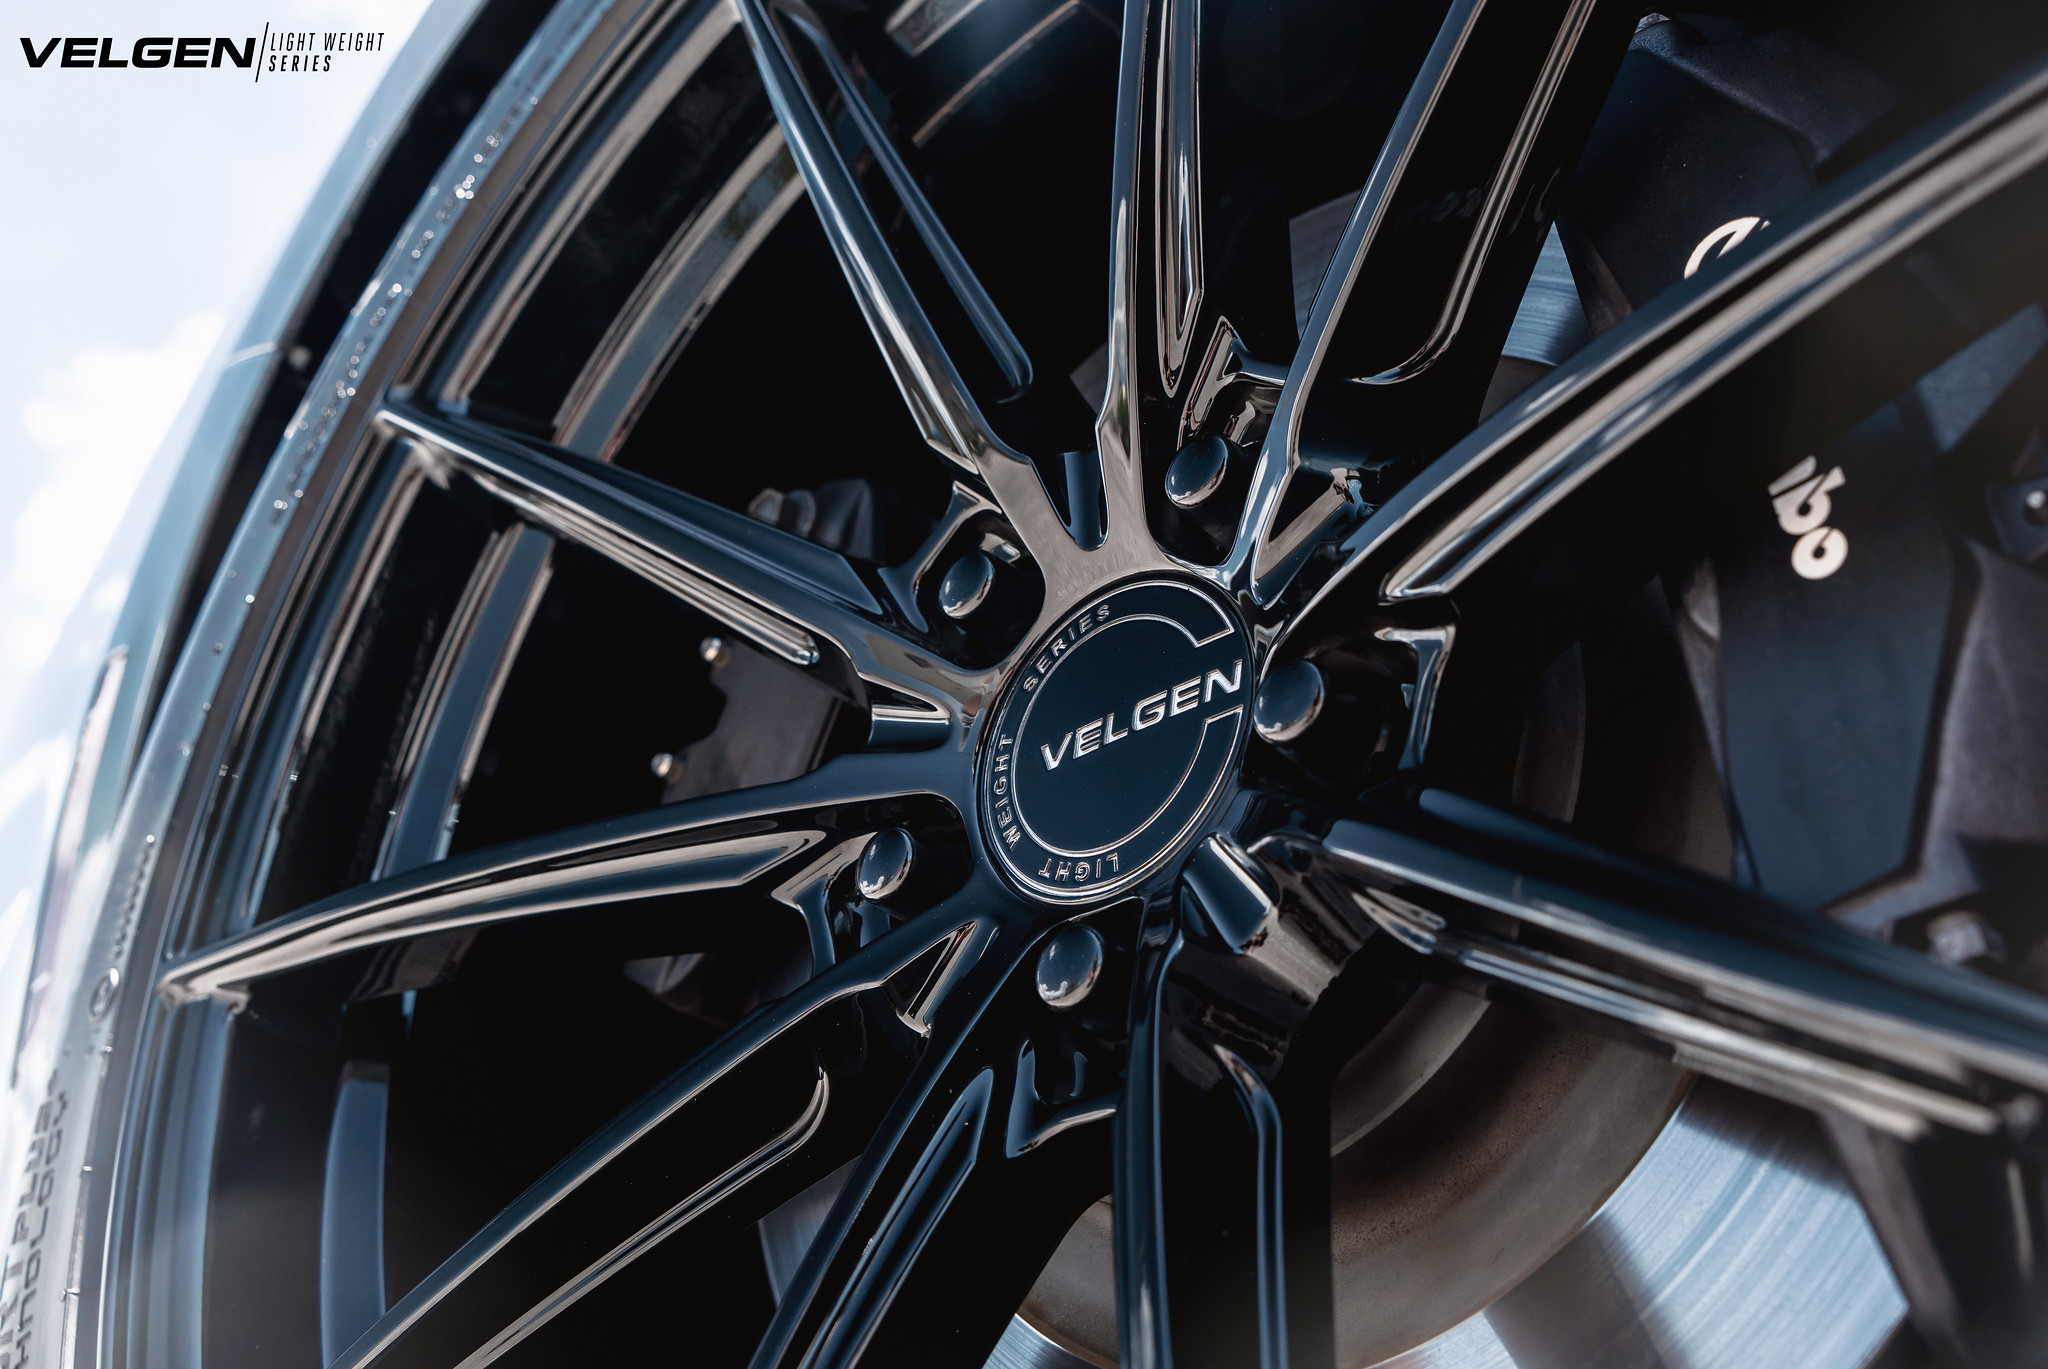 S650 Mustang Velgen wheels for your S650 Mustang | Vibe Motorsports 53771864193_fa6d87ee0b_k